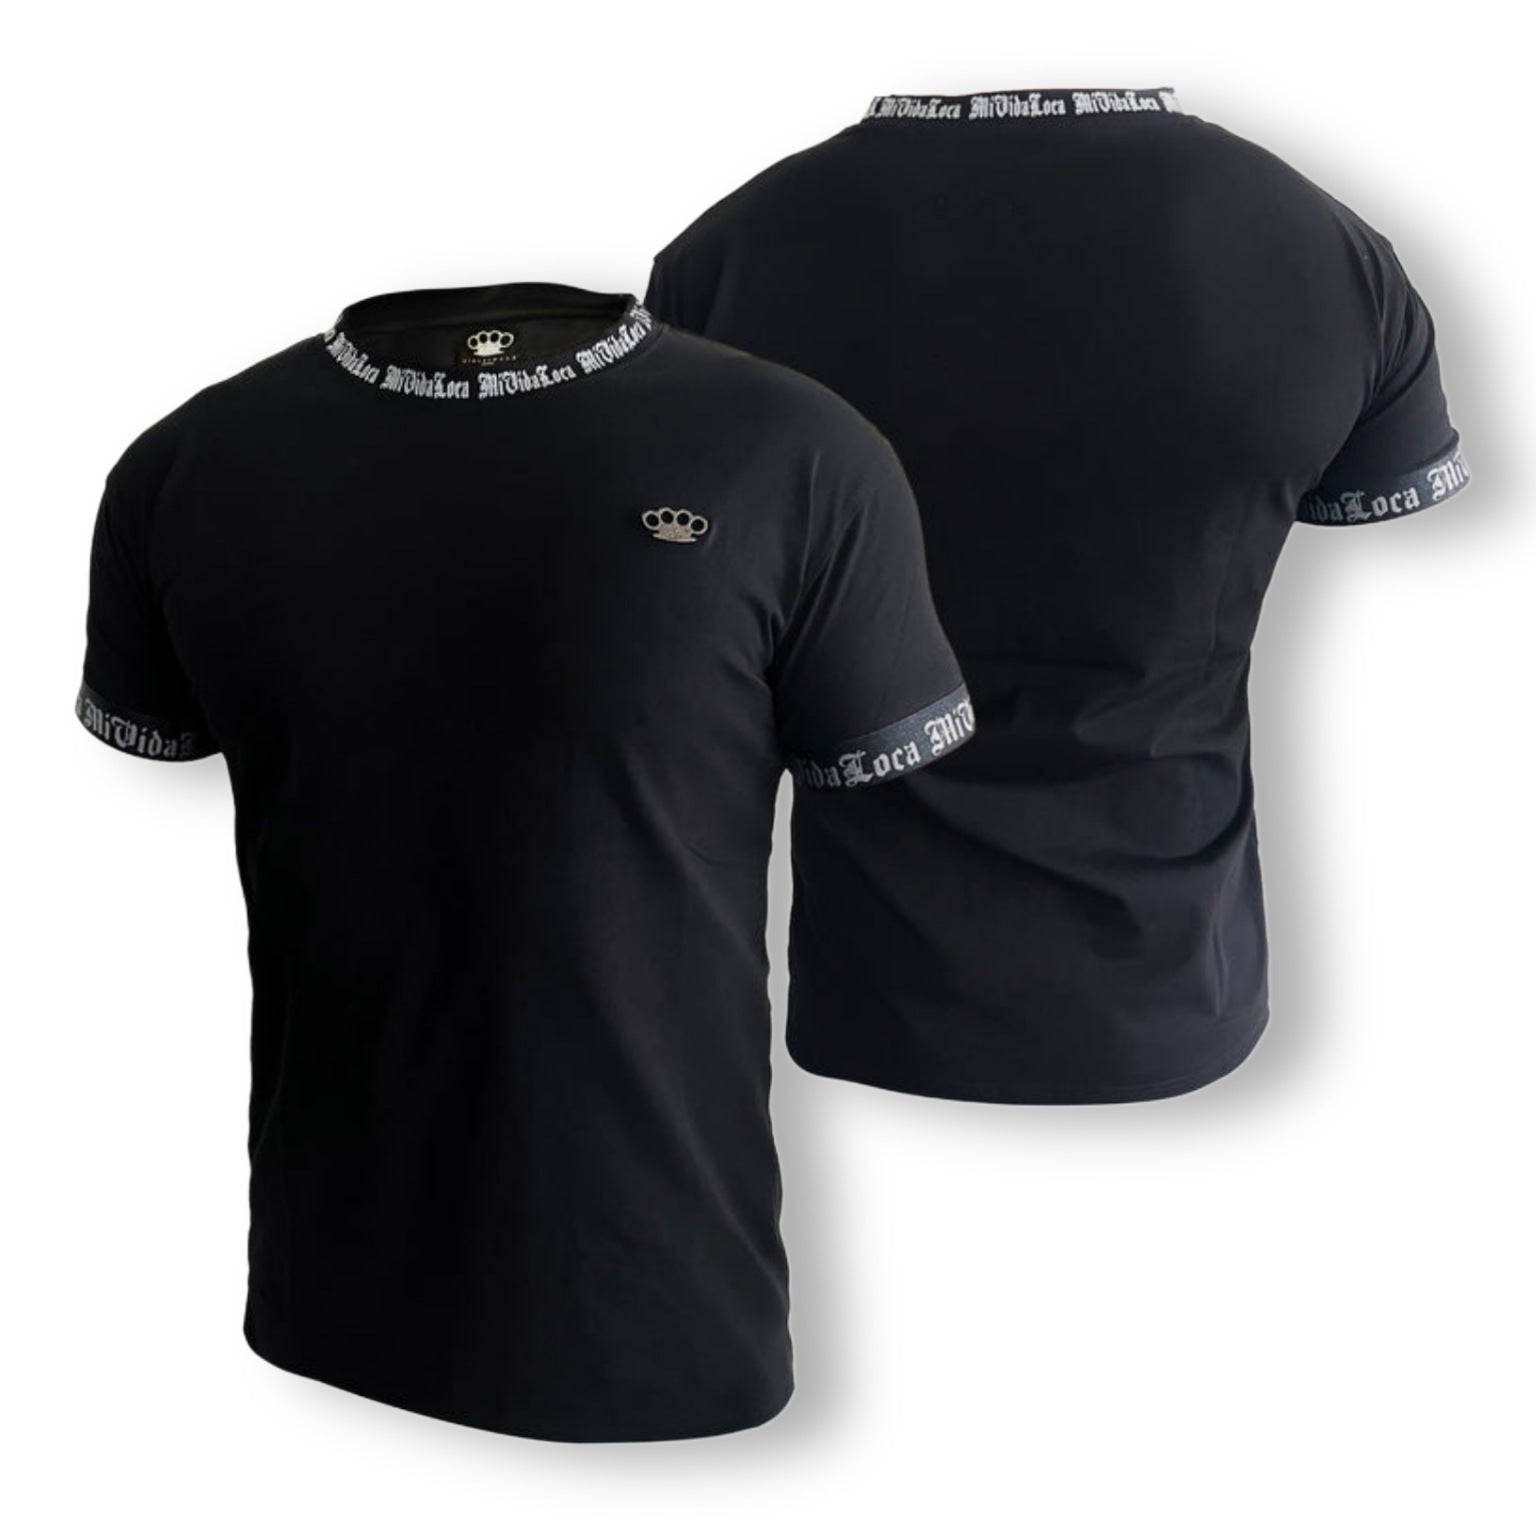 Camiseta MVL "black line bandit" - negra/gris